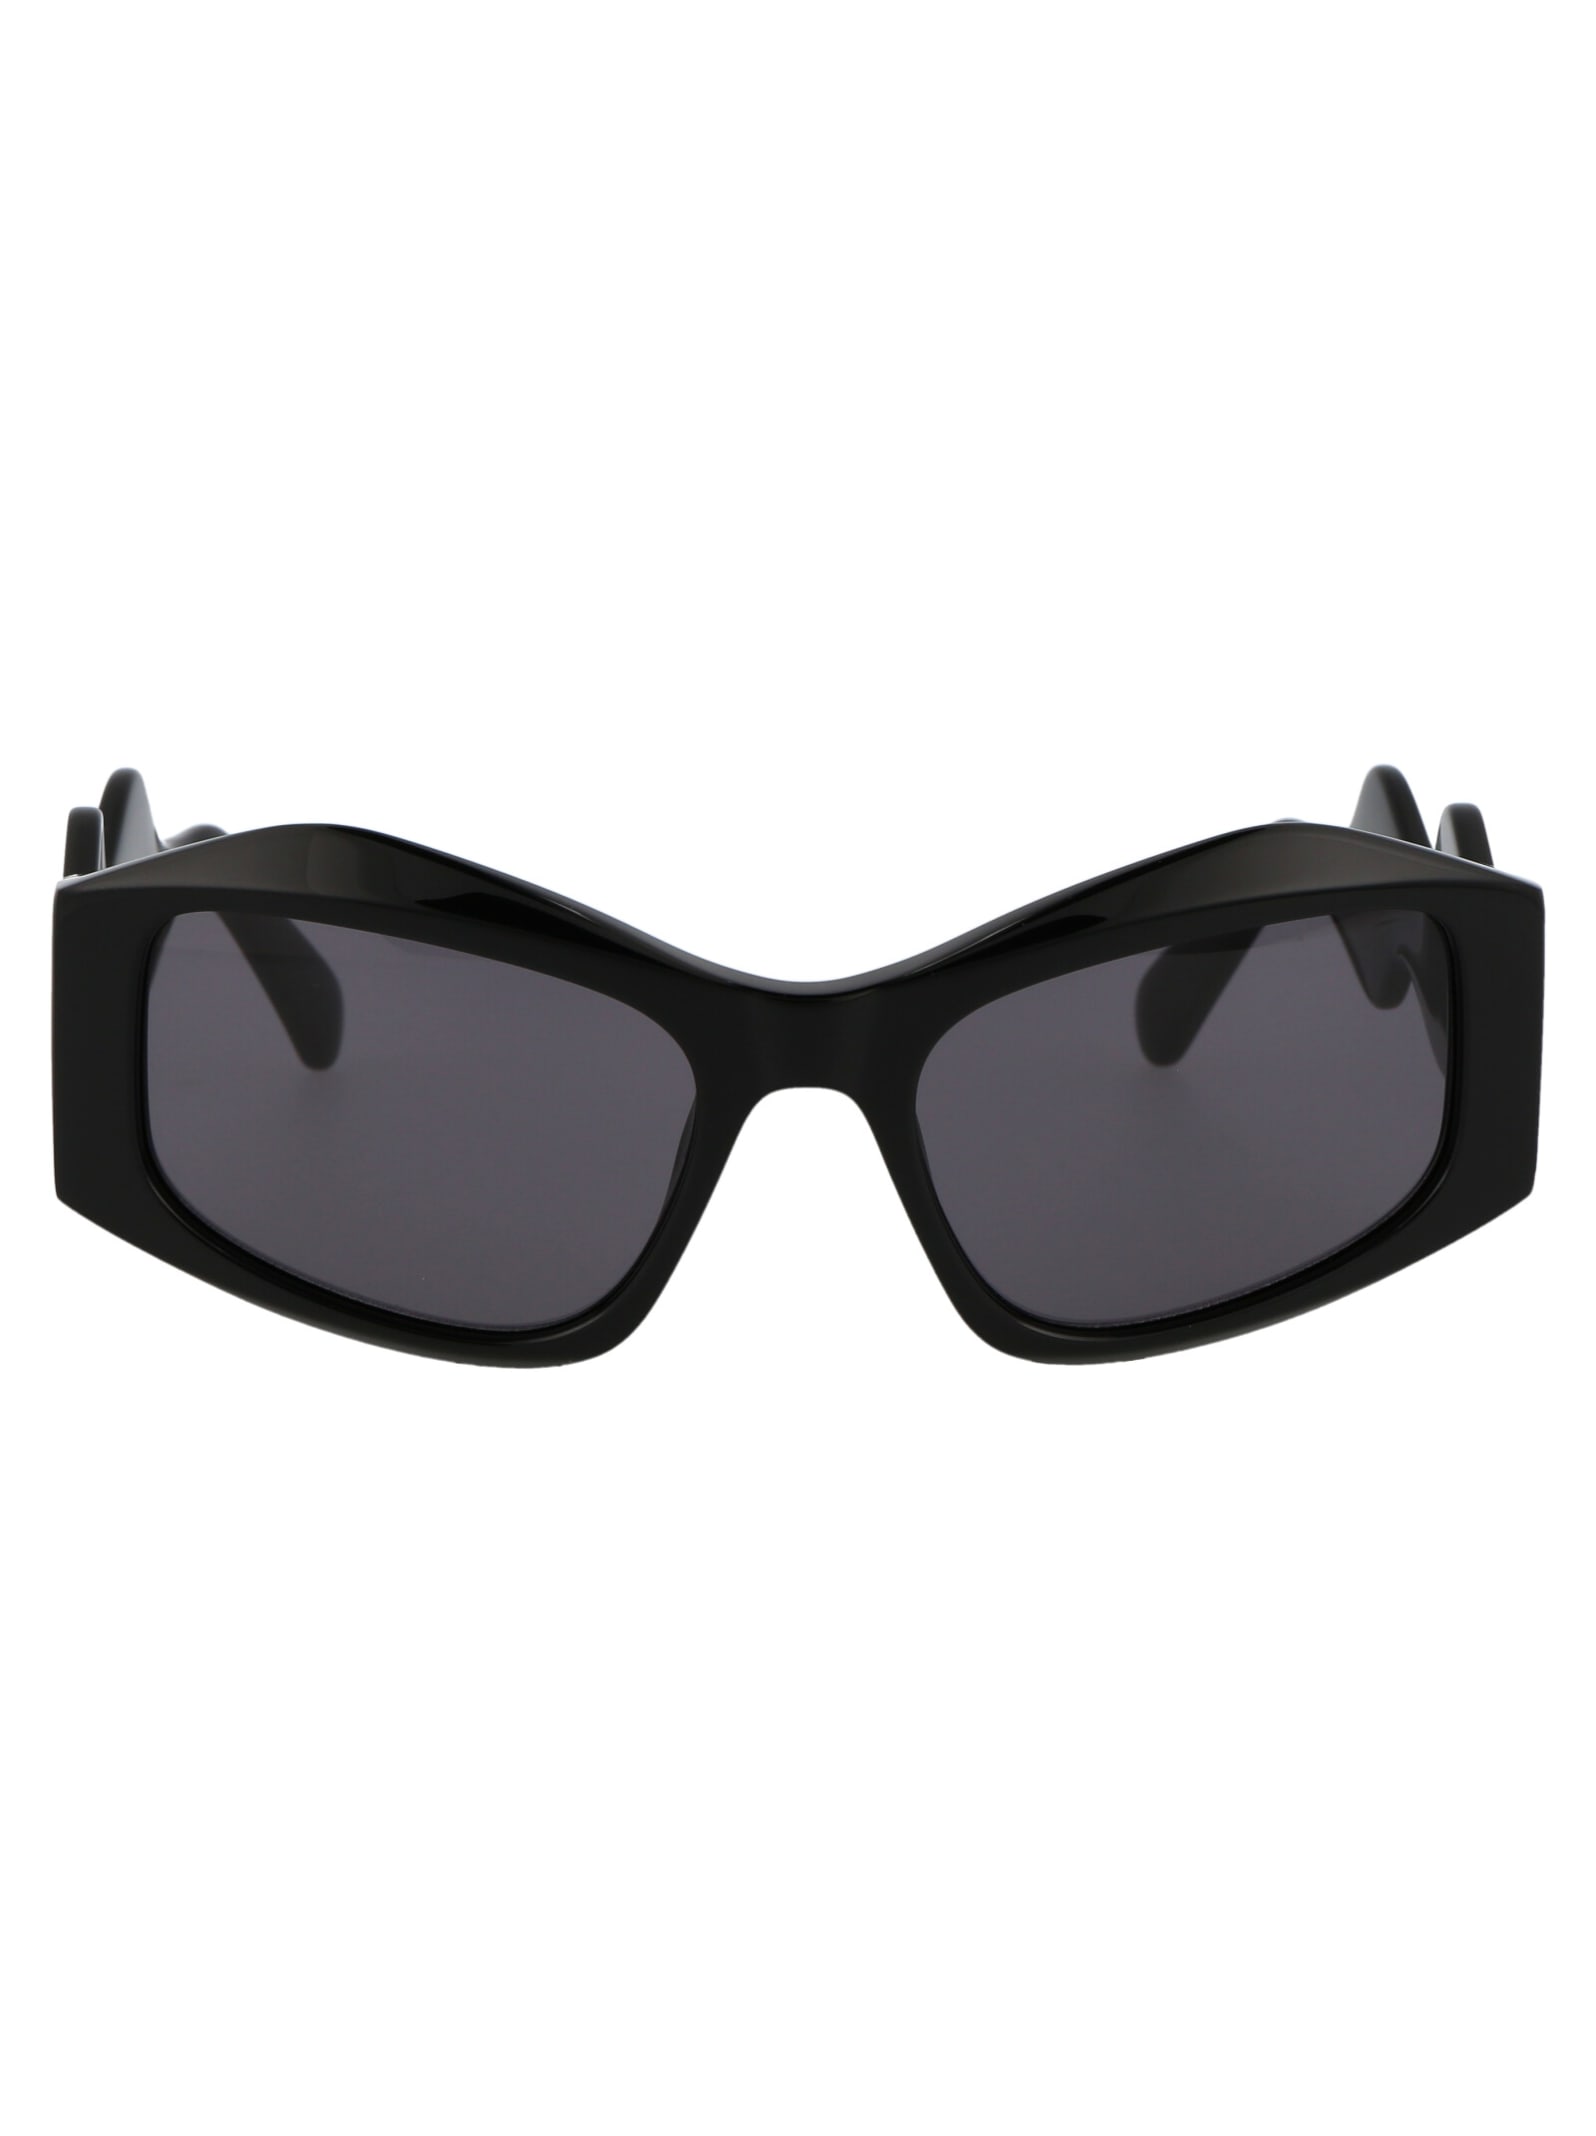 Gd0023 Sunglasses